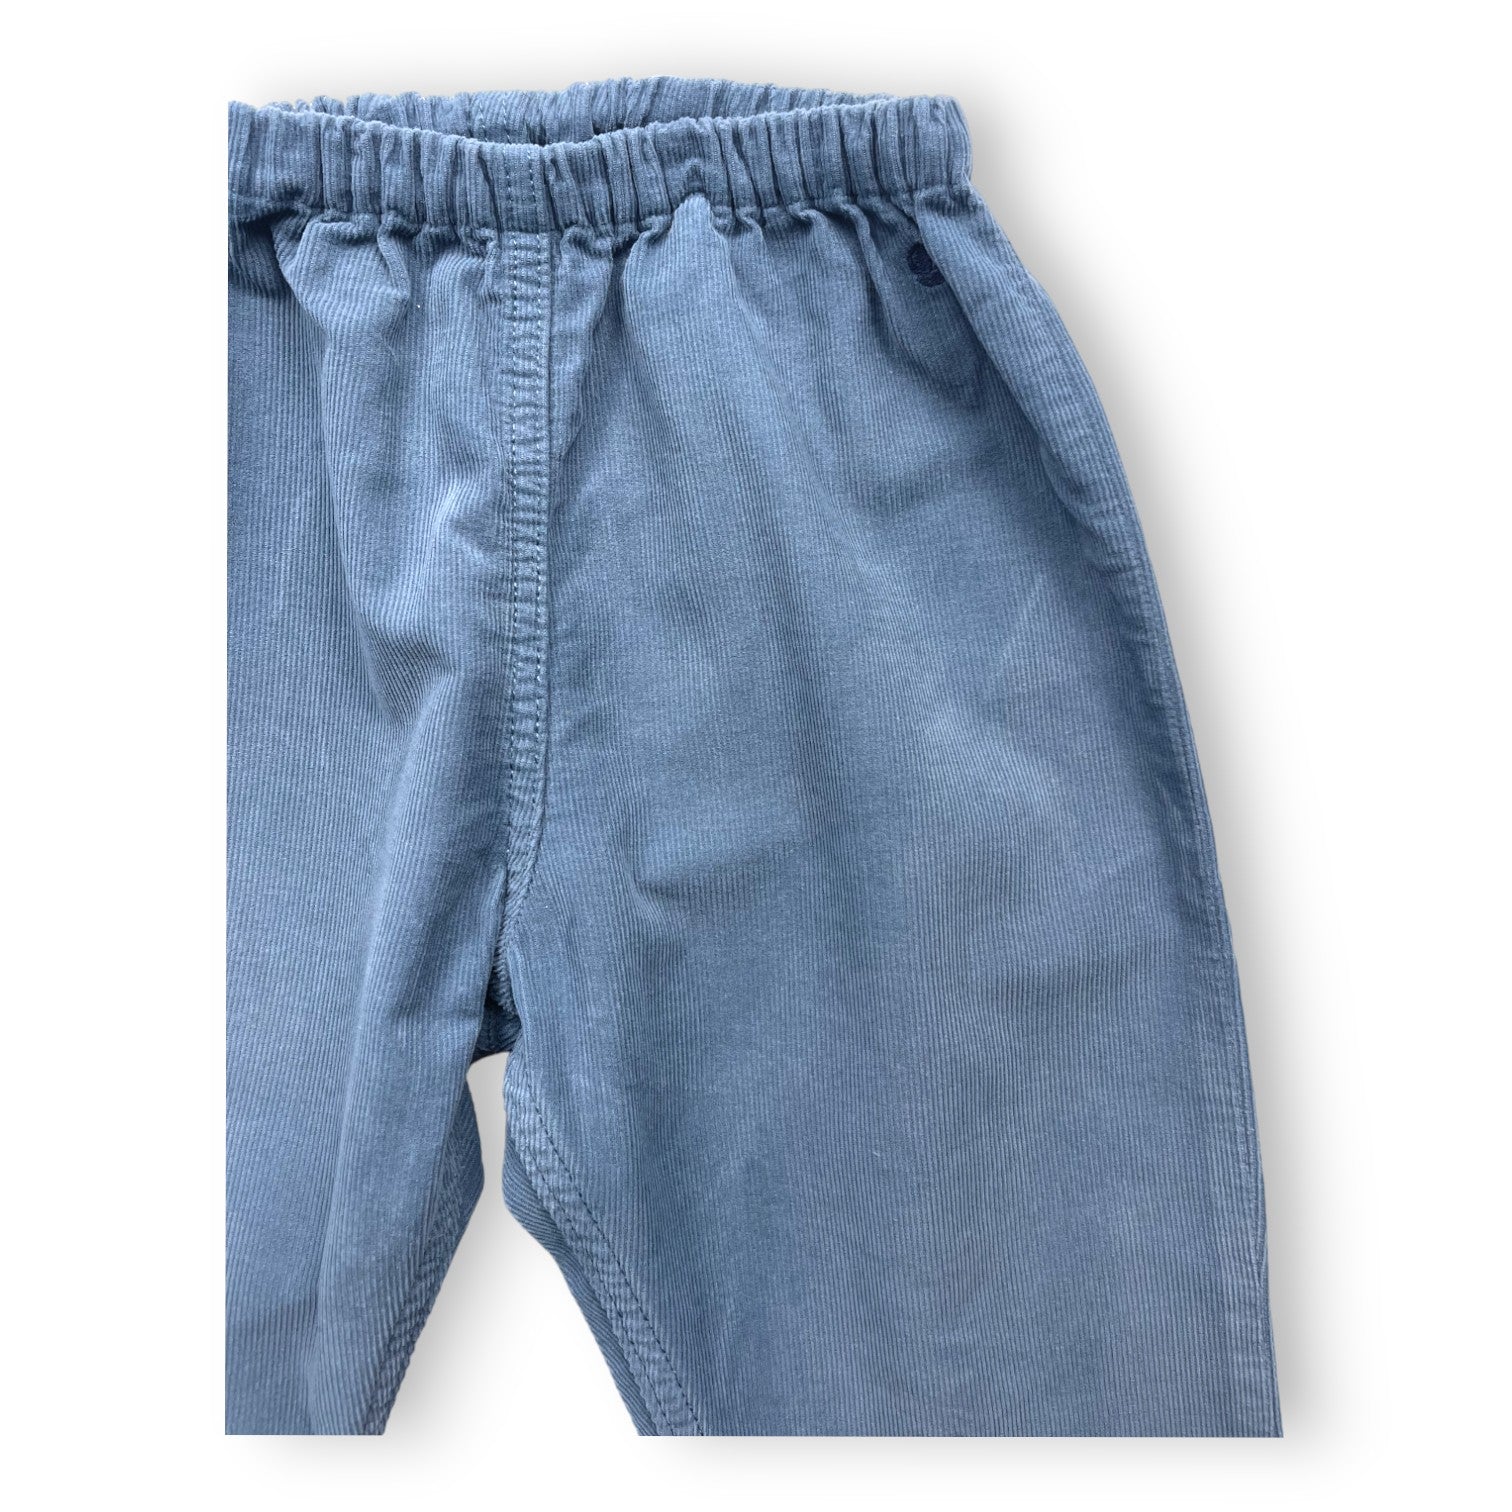 PETIT BATEAU - Pantalon turquoise en velours - 18 mois